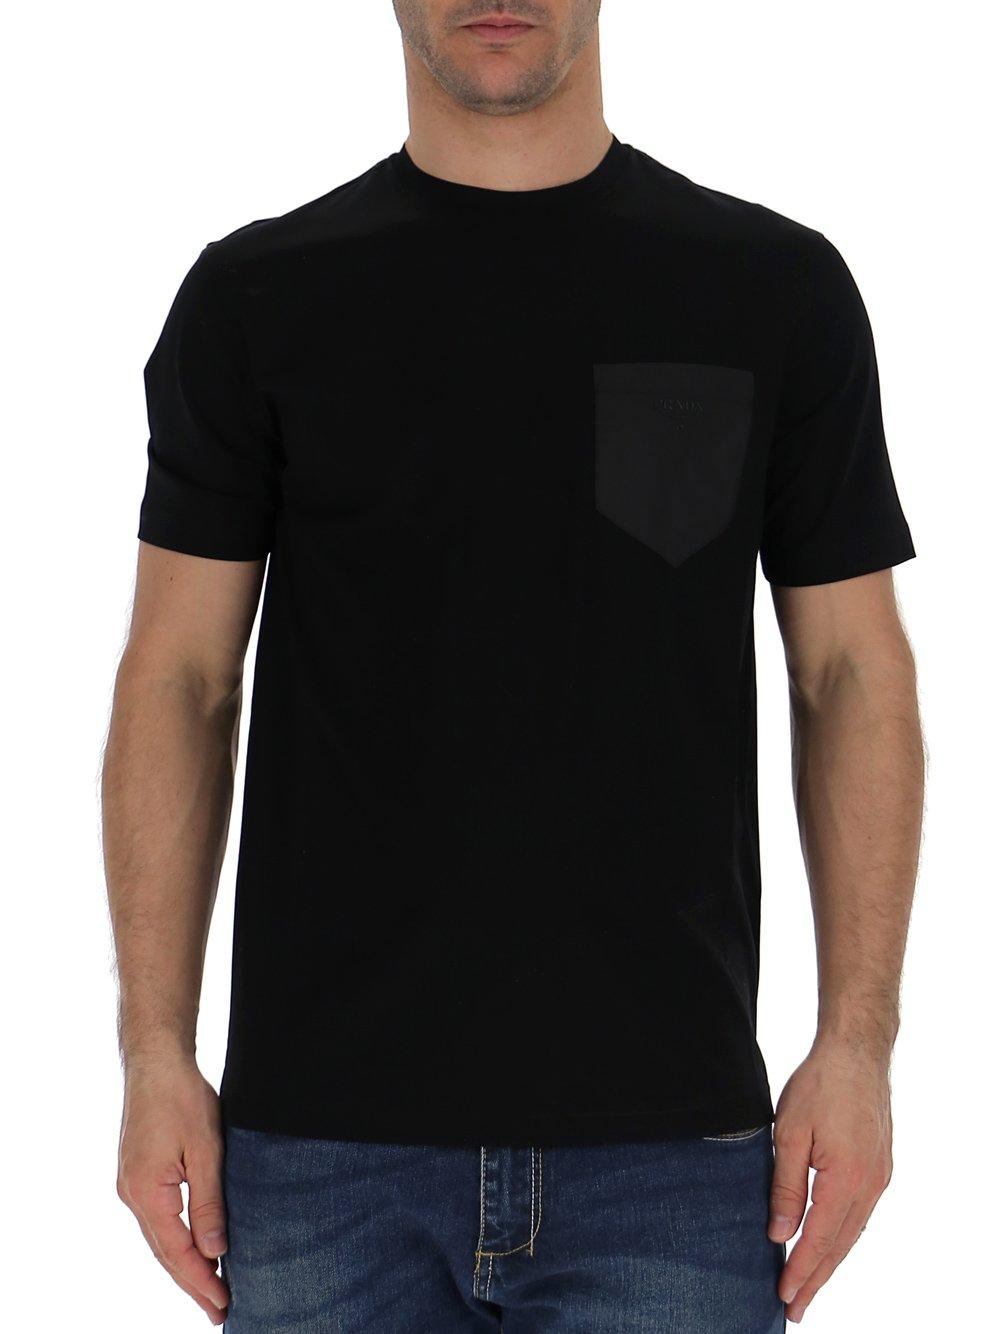 Prada Chest Pocket T-shirt in Black for Men - Save 48% - Lyst